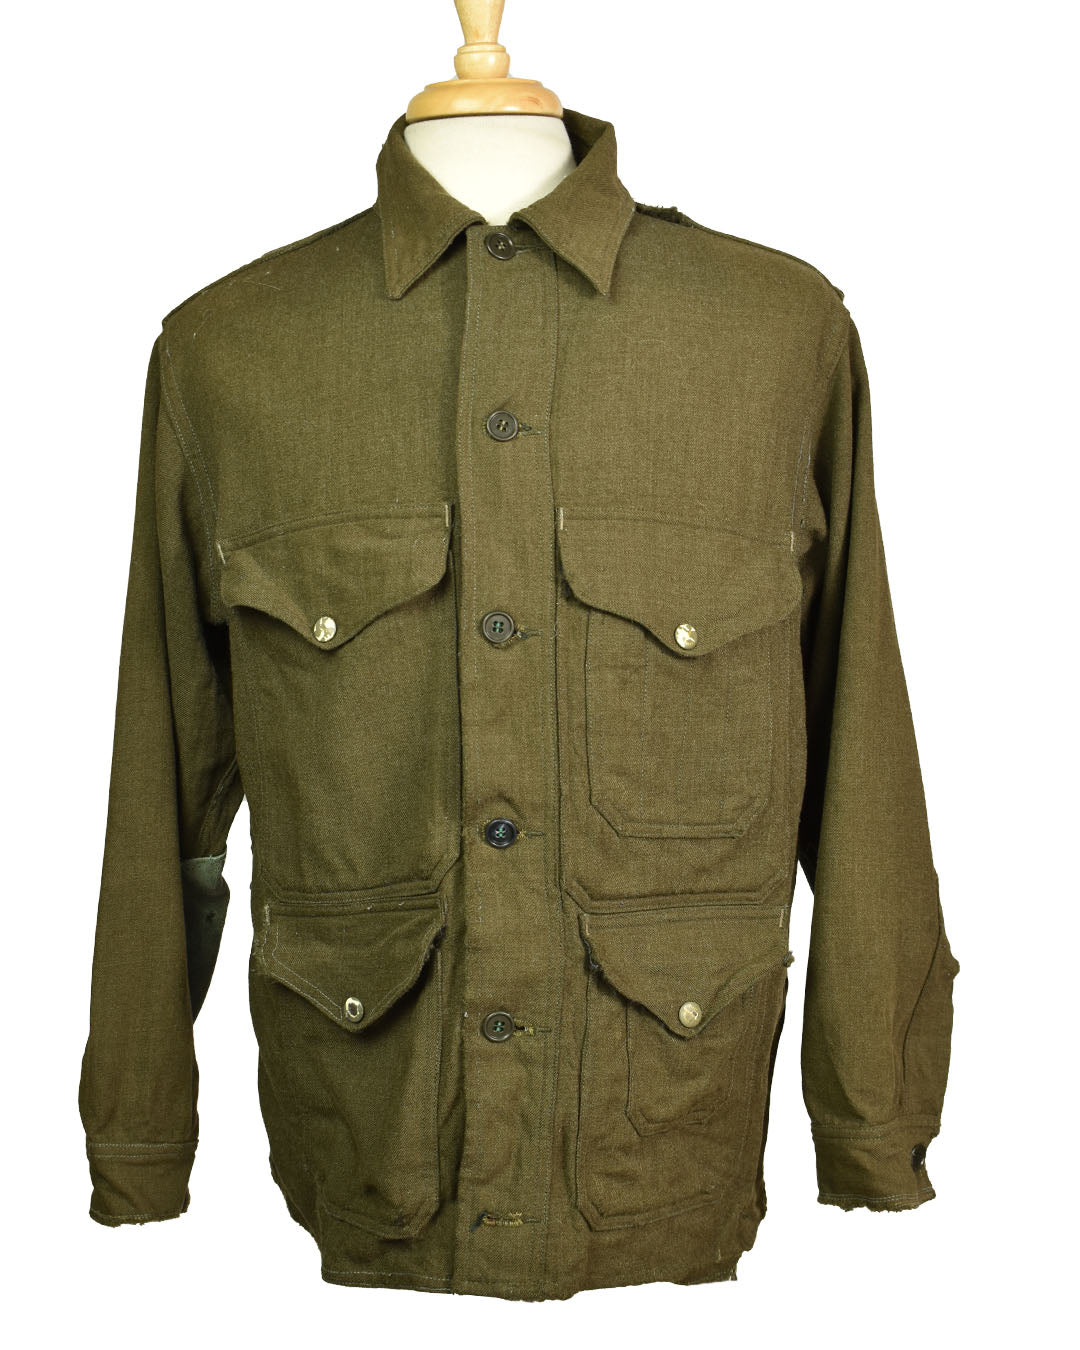 Vintage C.C. Filson Co Mackinaw Cruiser Coat Virgin Wool Green Mens Jacket Made in USA